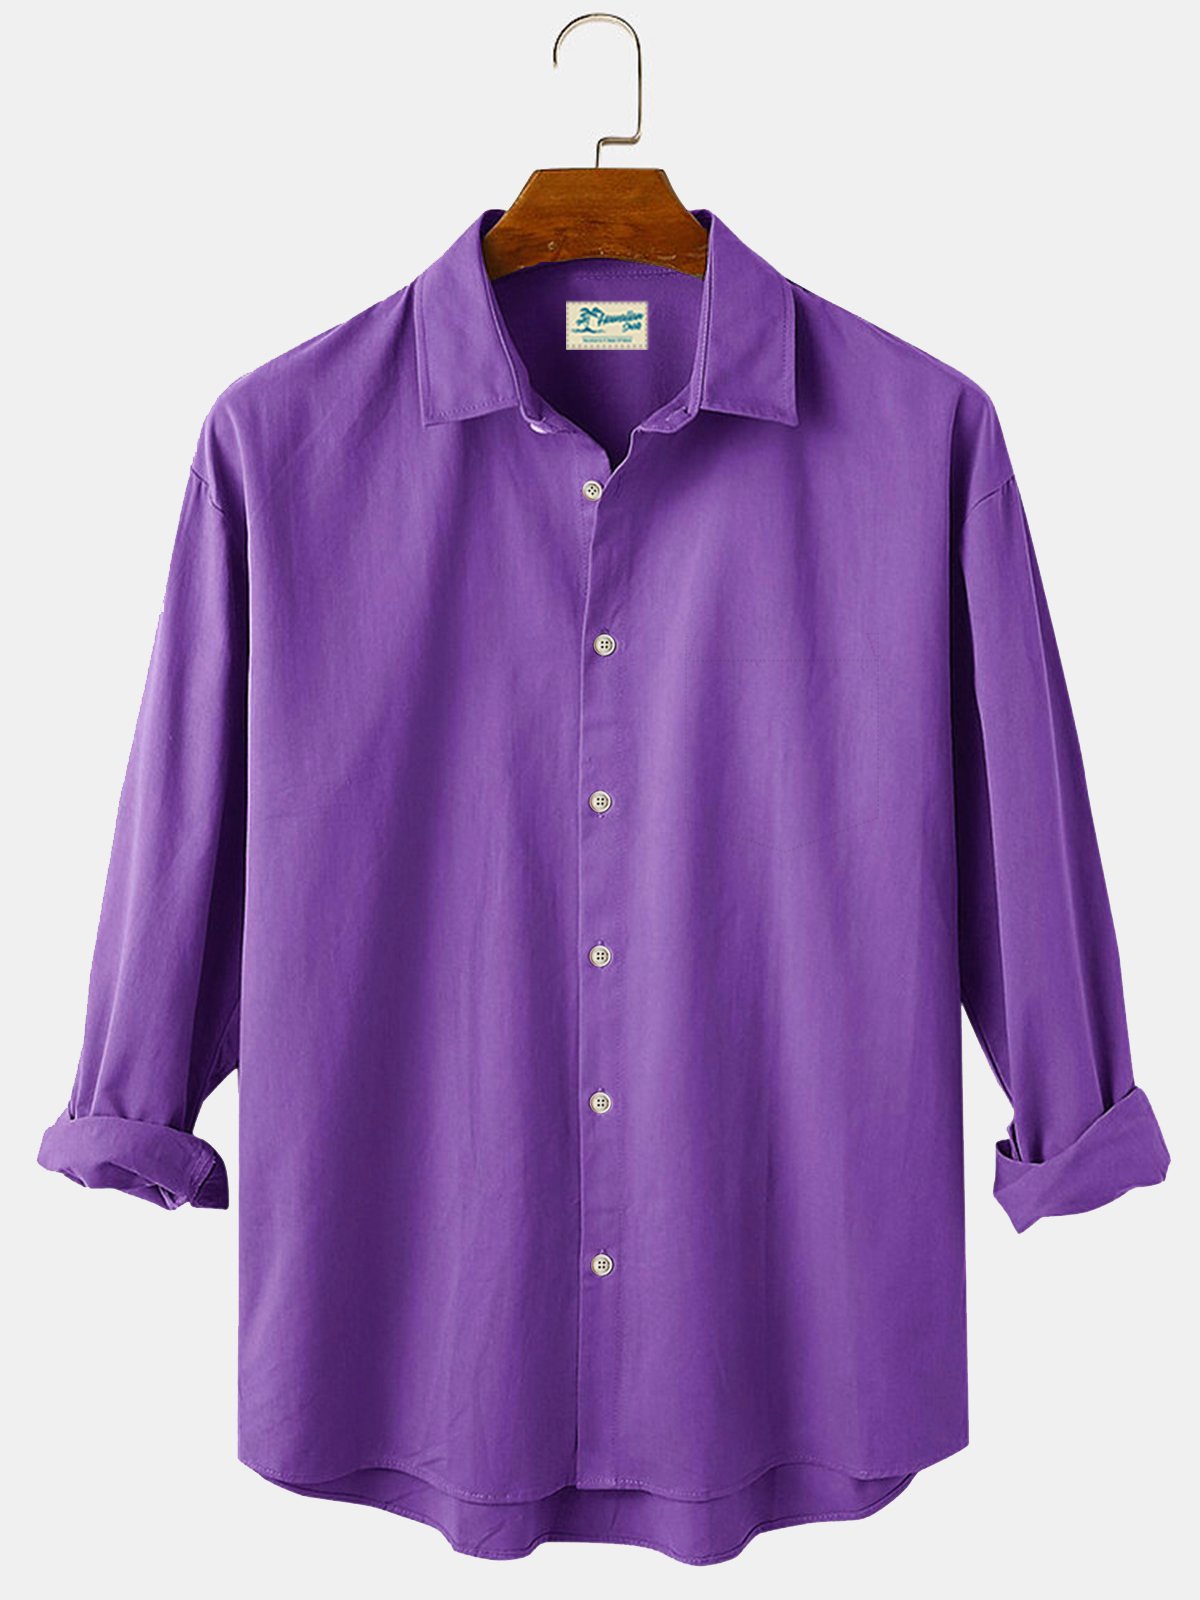 Royaura Men's Vintage Casual Plain Long Sleeve Shirts Comfortable Blend Anti-Wrinkle Seersucker Easy Care Shirts